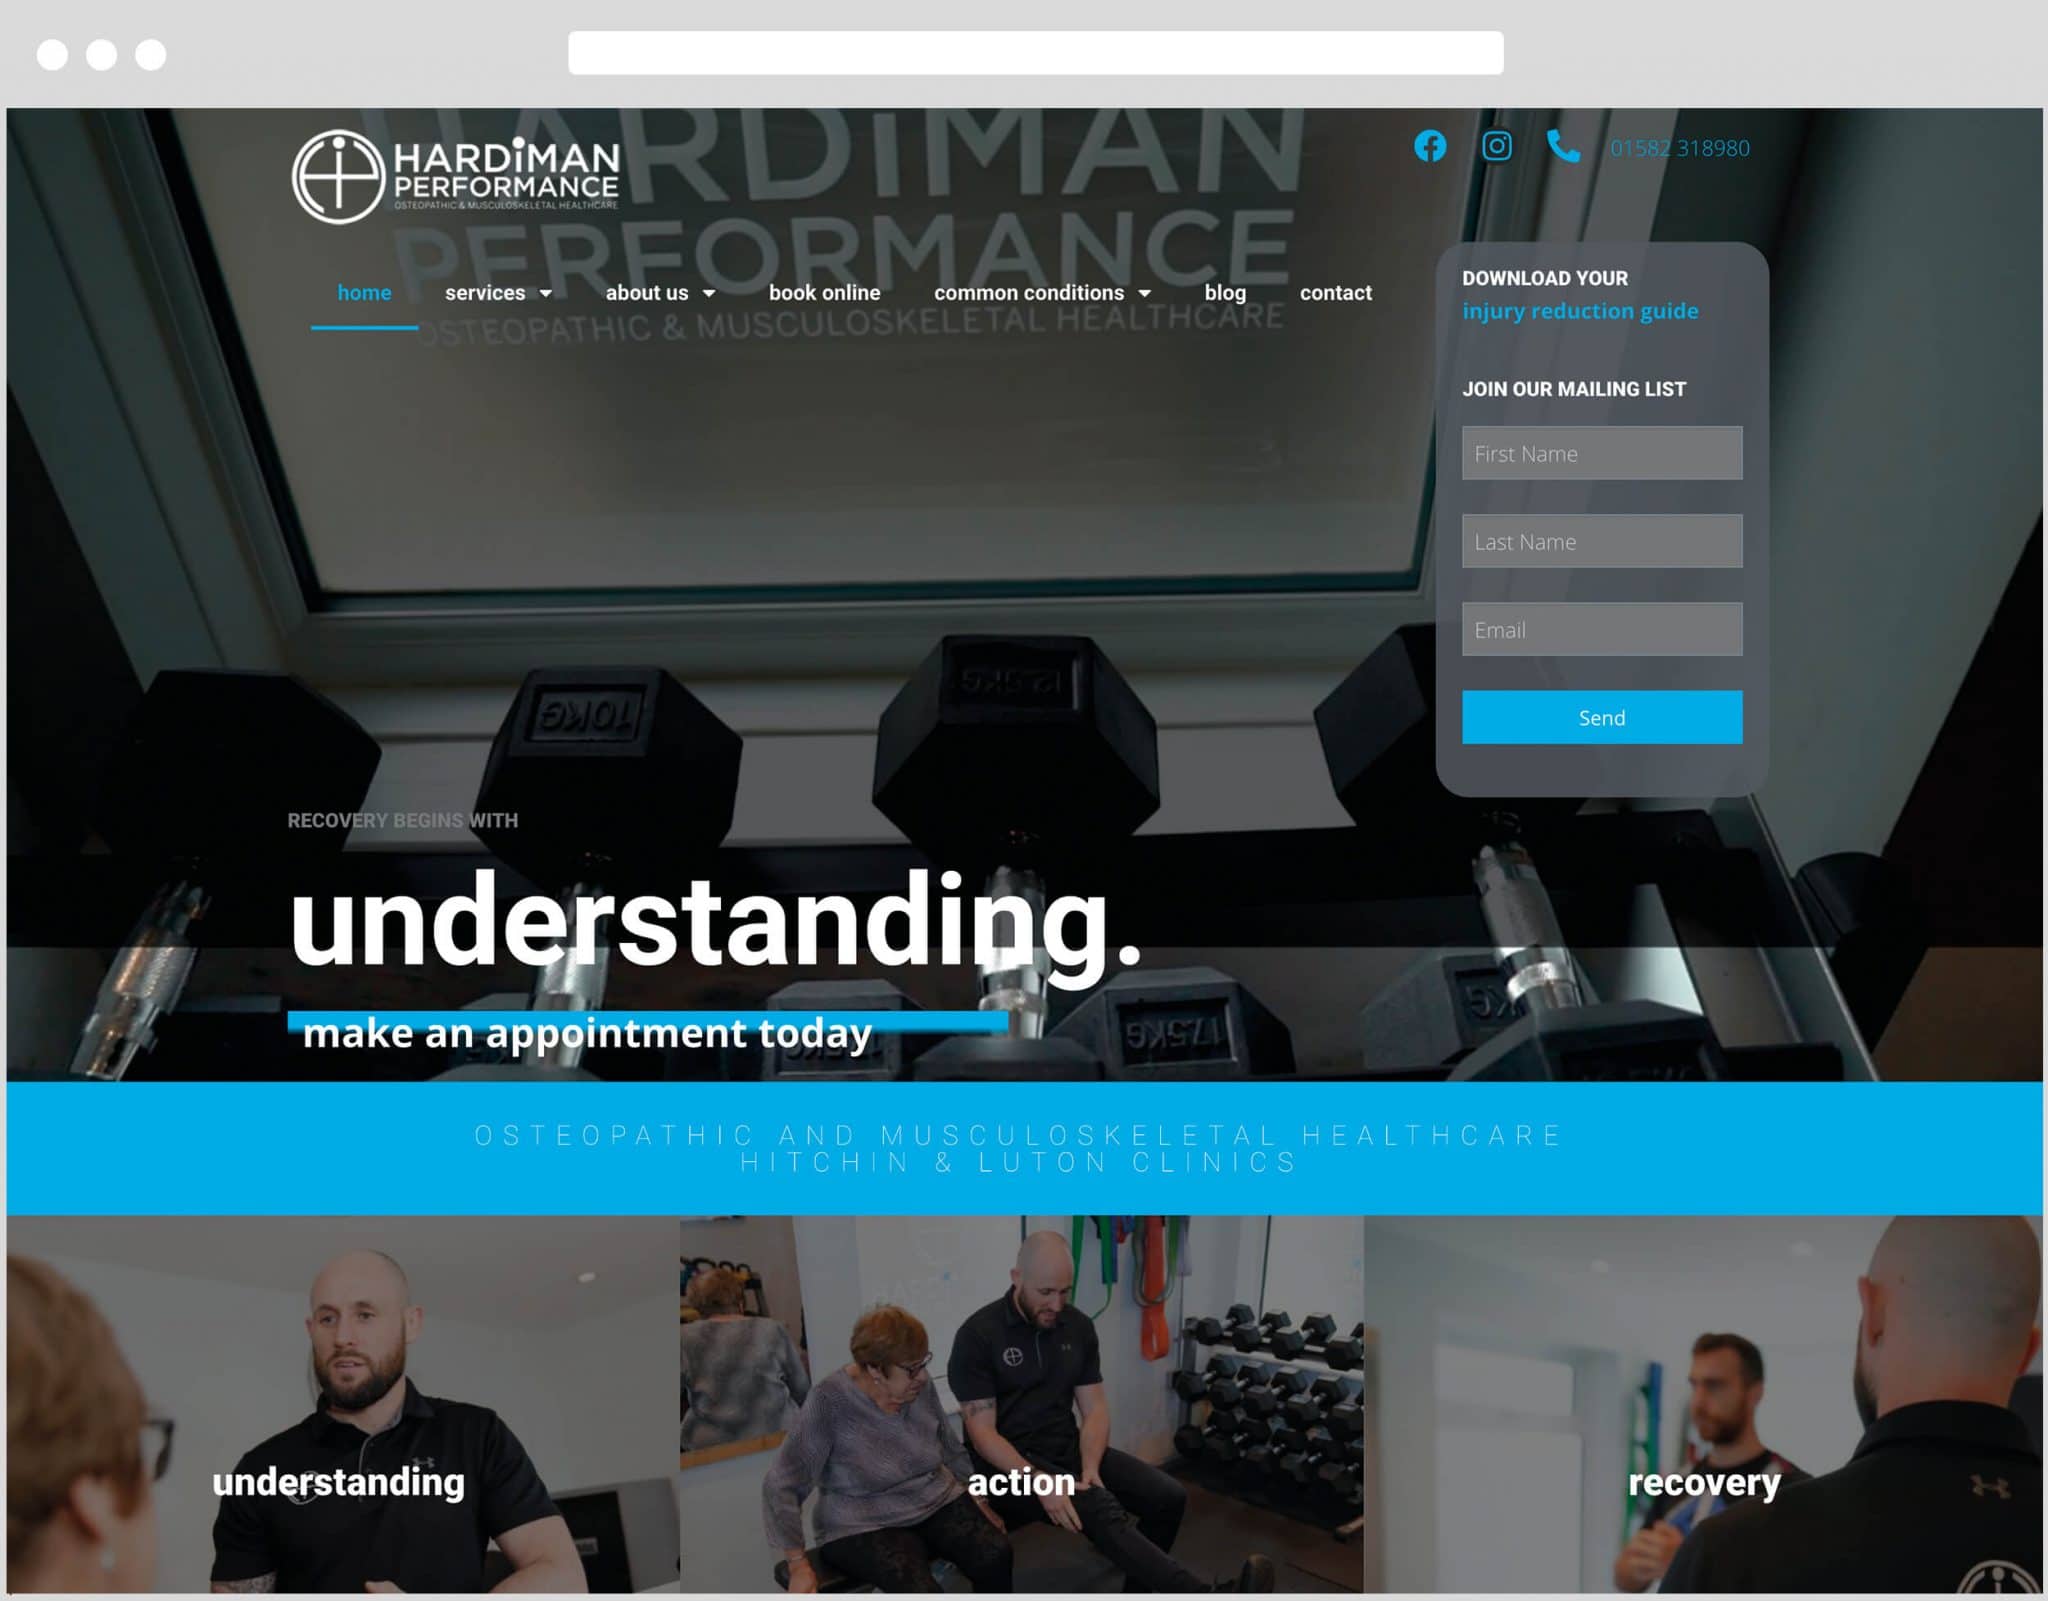 Web Design Bedfordshire - Hardiman Performance Website Build